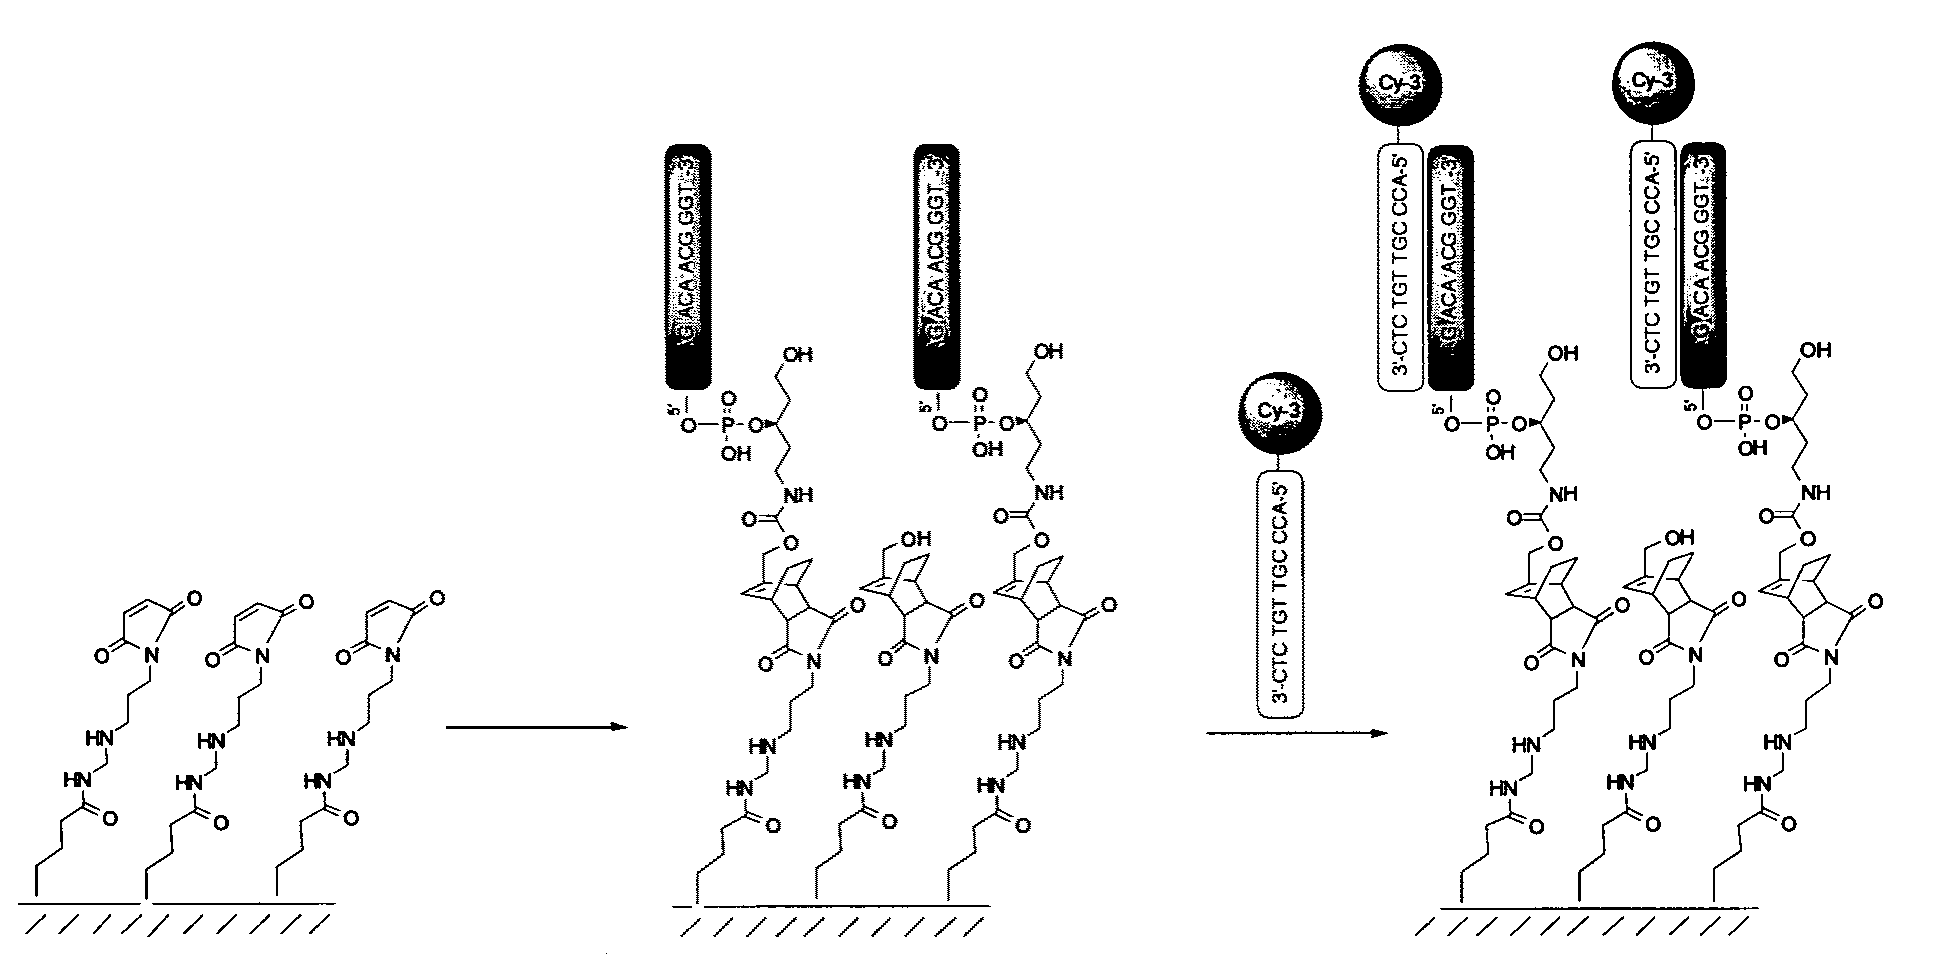 Oligonucleotide arrays